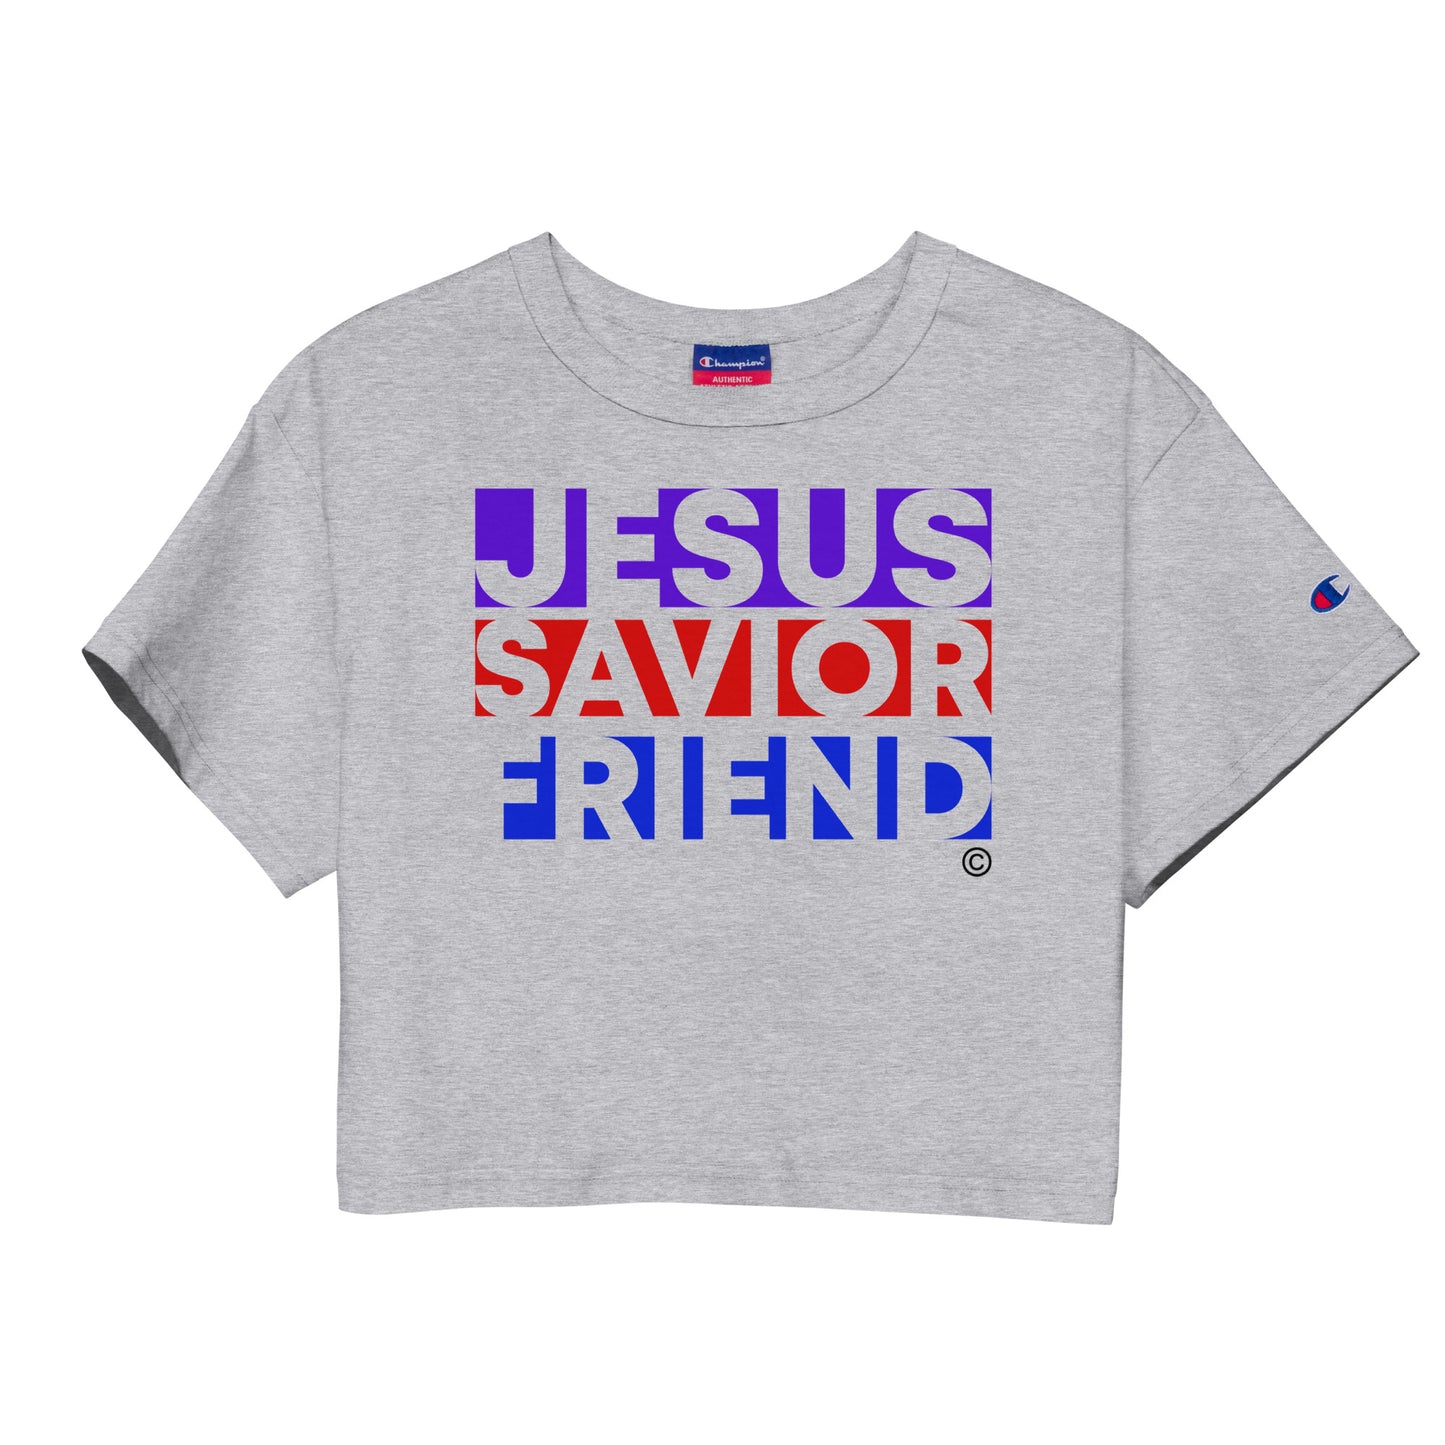 Jesus Savior Friend Champion Crop Top